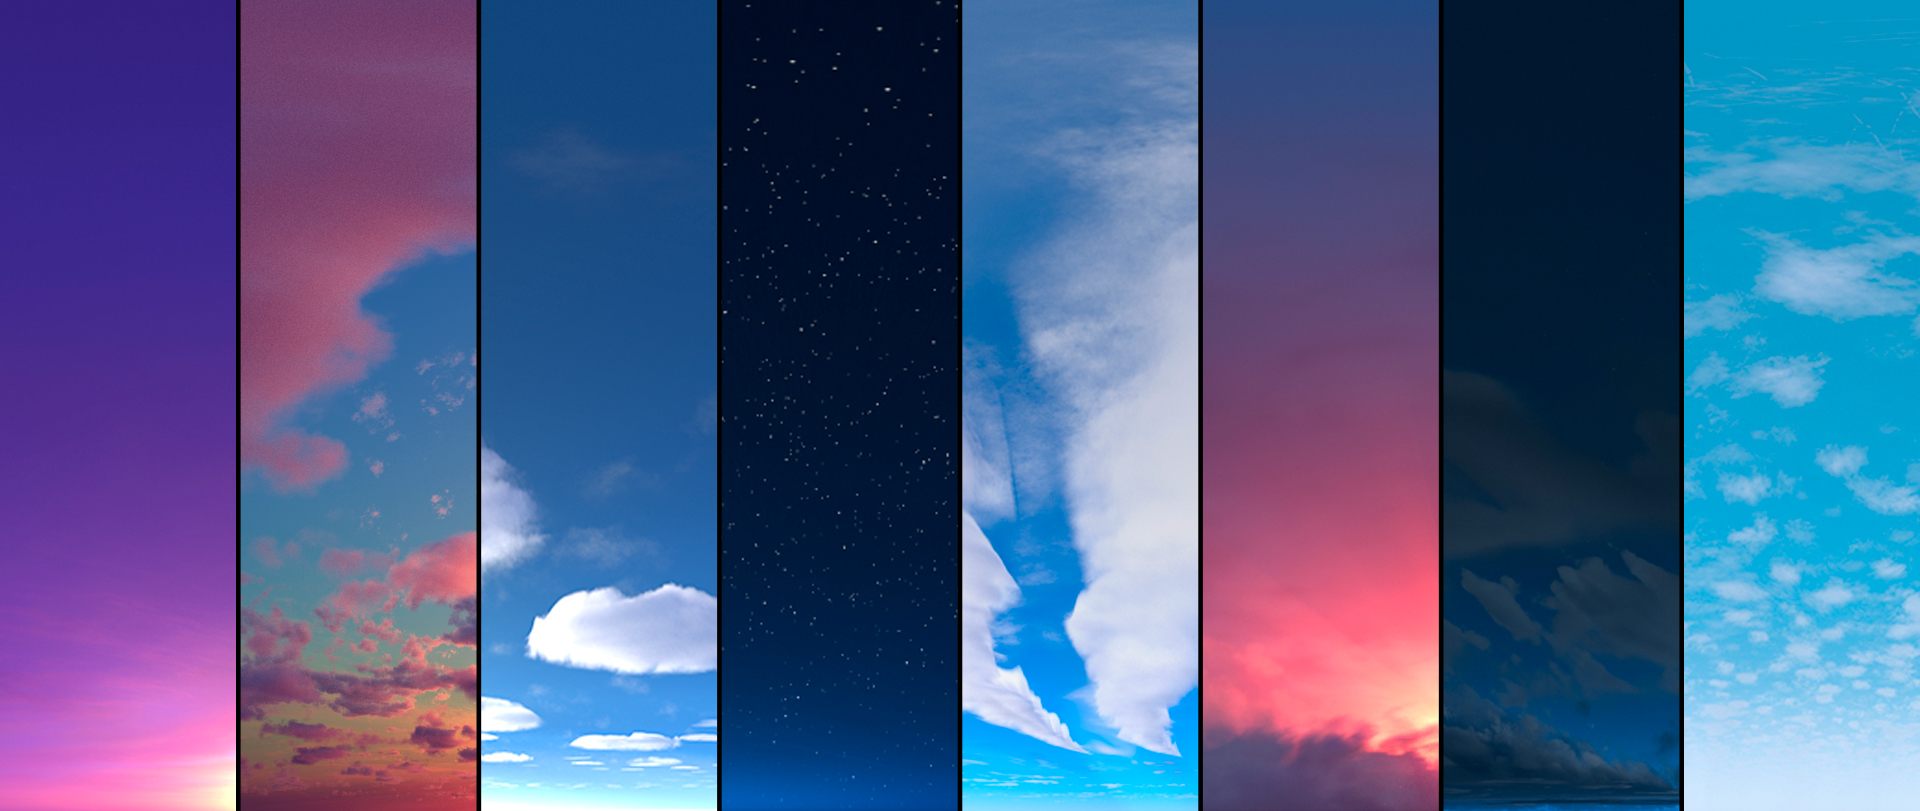 Terragen Skies created for Missing Link